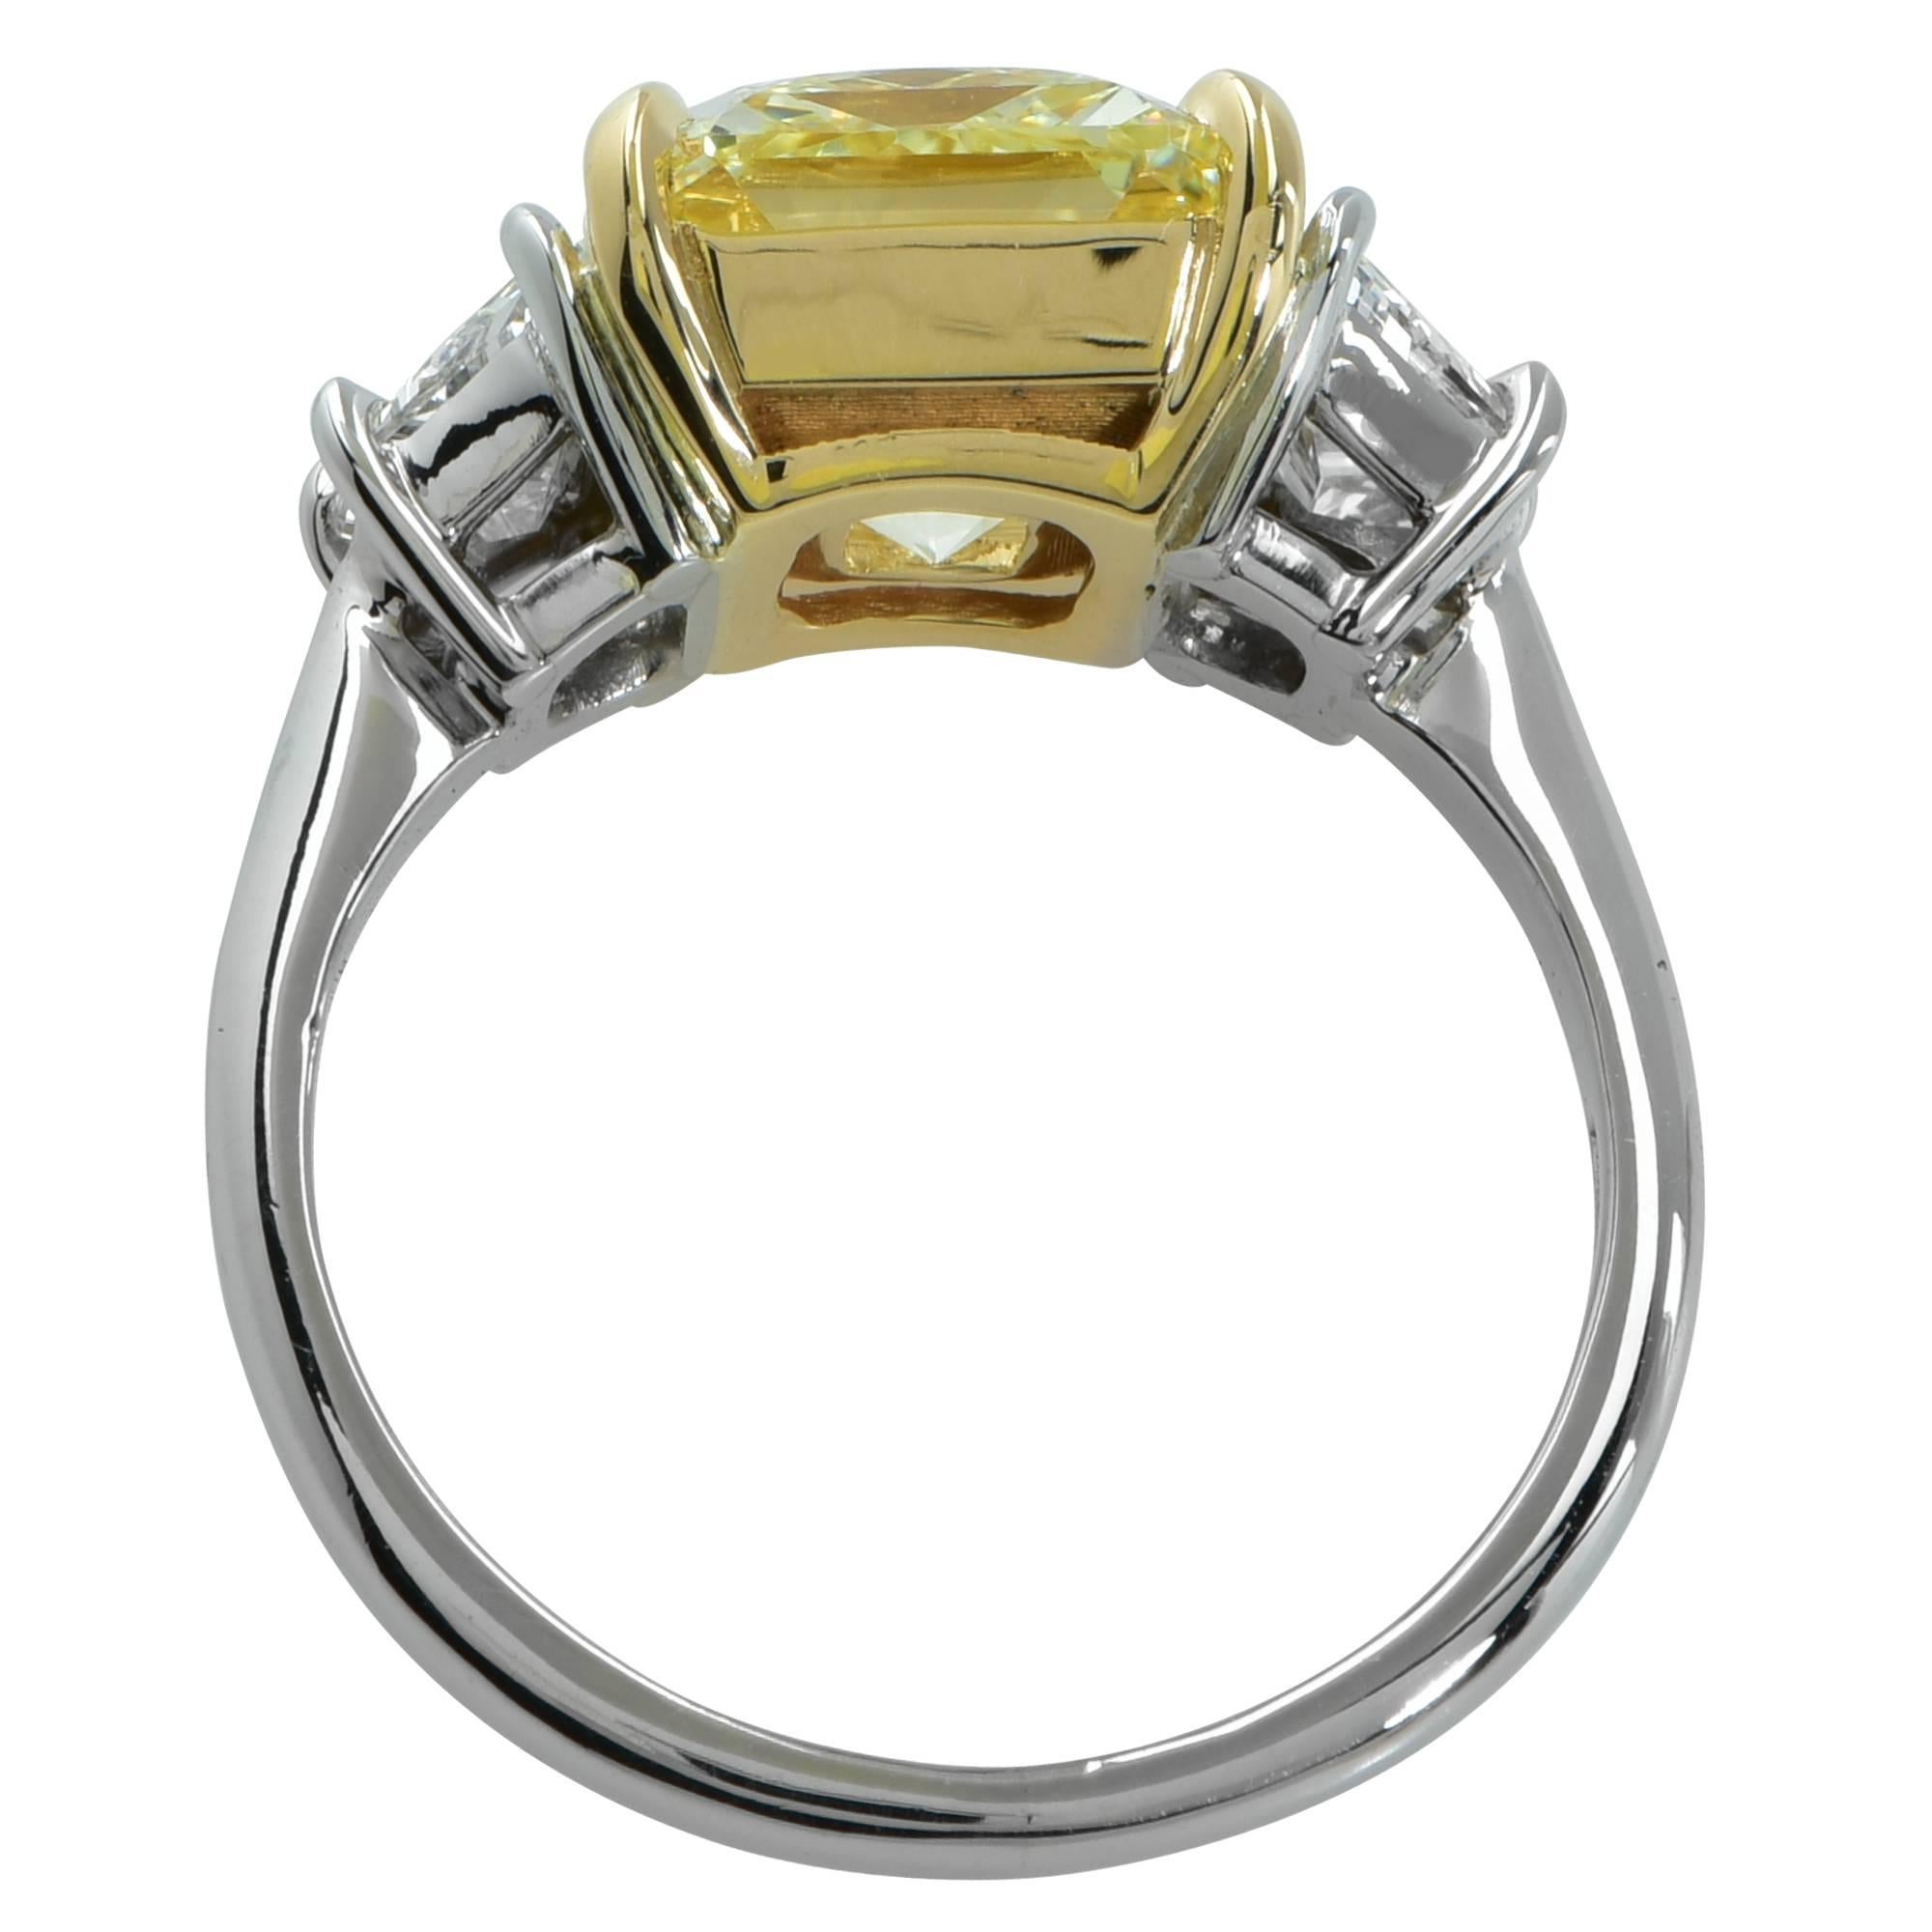 Radiant Cut 4.09 Carat GIA Graded Fancy Yellow Diamond Engagement Ring